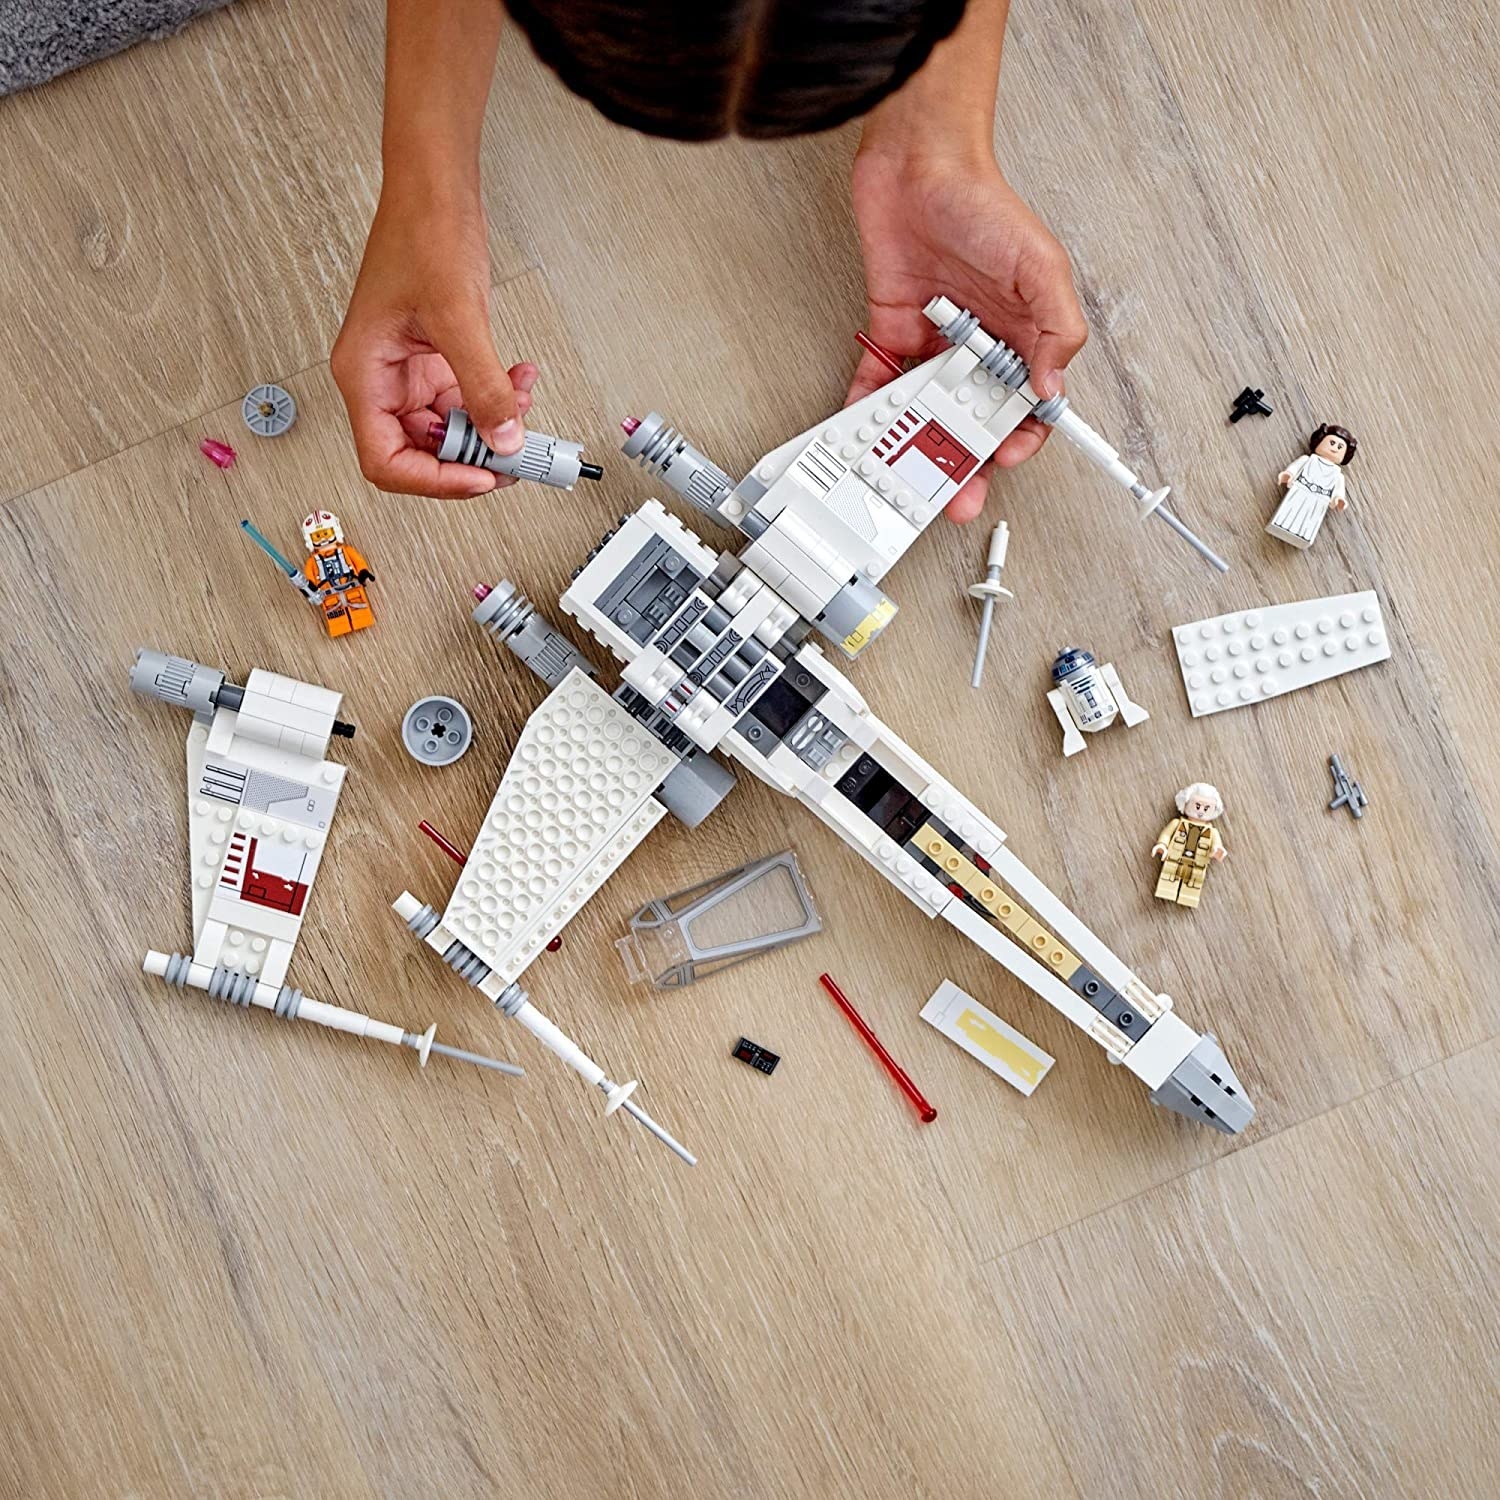 hands putting together the LEGO set